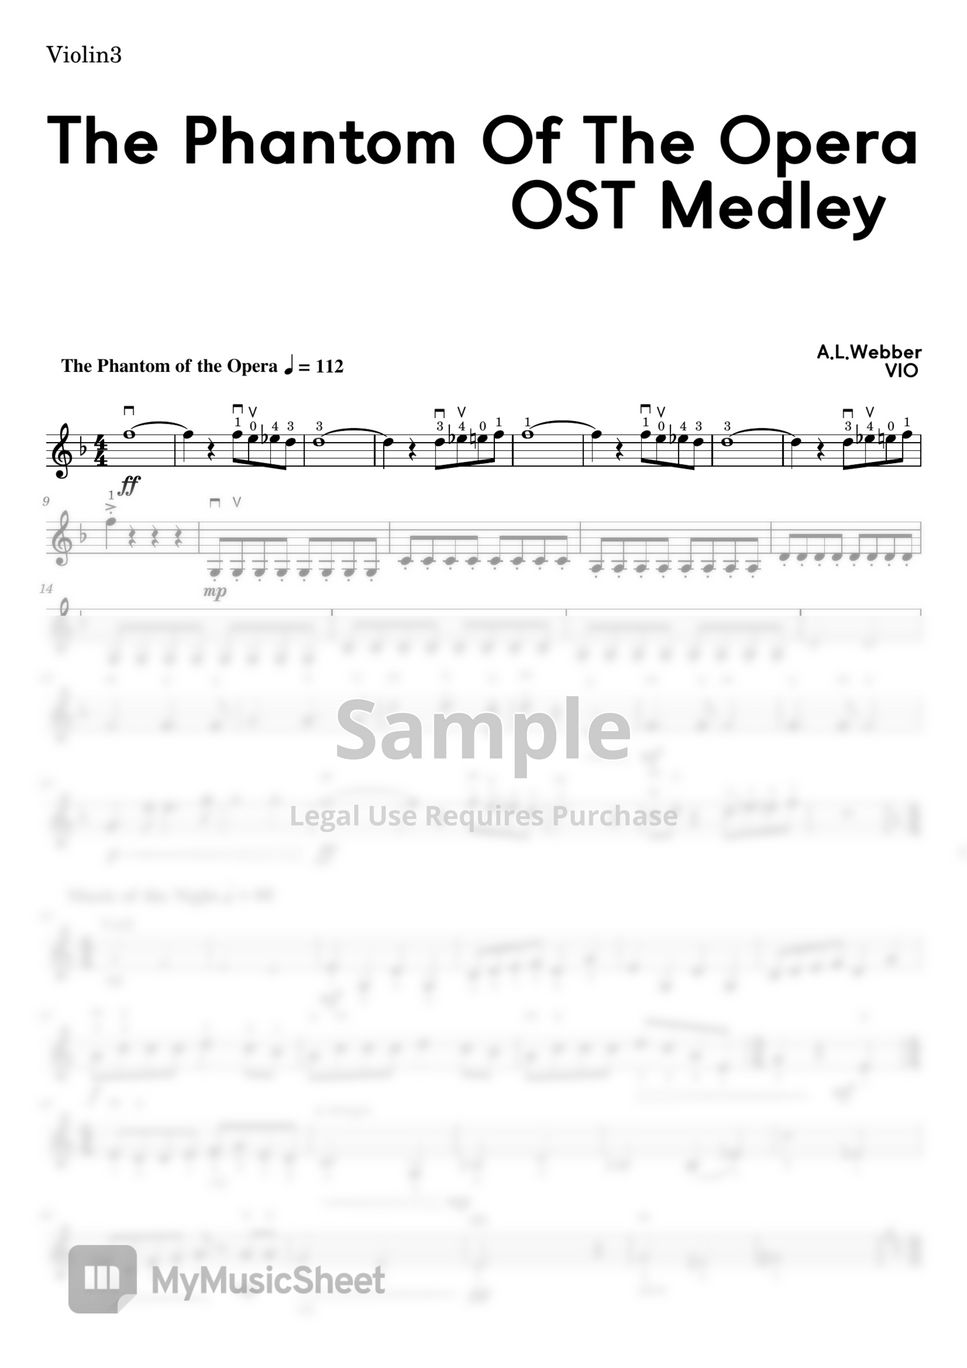 Andrew Lloyd Webber - The Phantom Of The Opera OST Medley (for 4 Violin Ensemble) by VIO